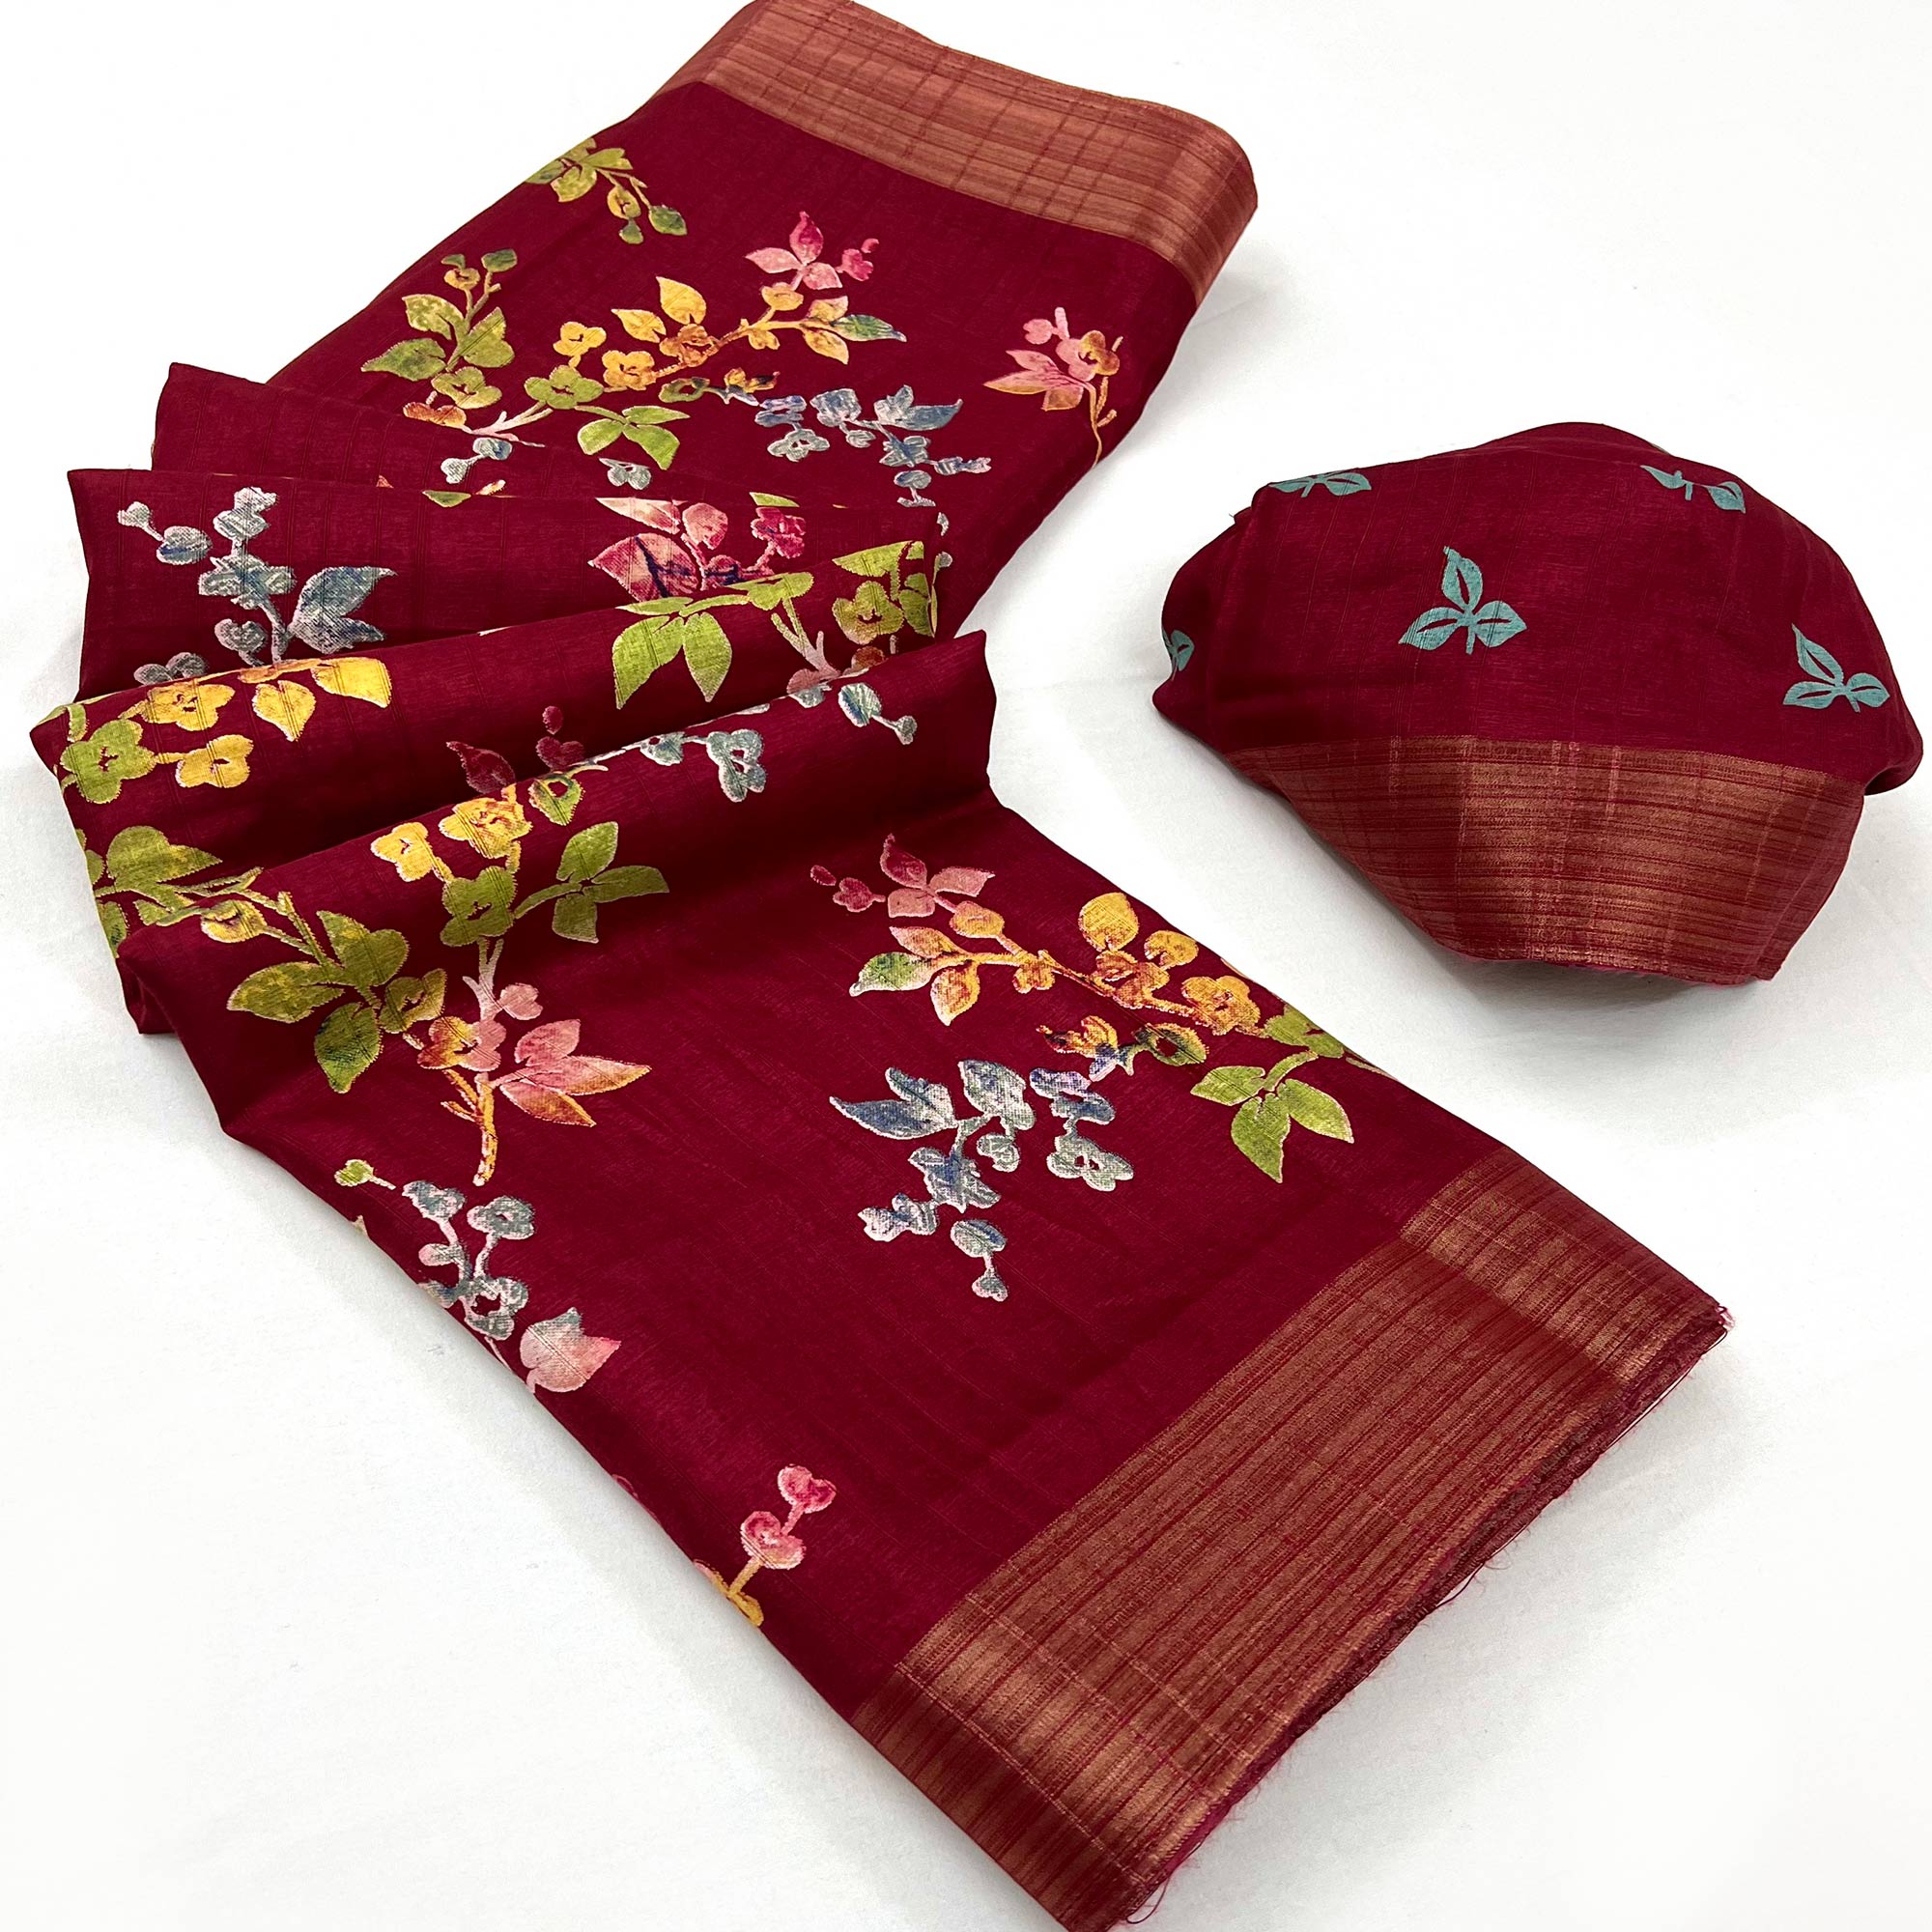 Maroon Floral Printed Cotton Silk Saree